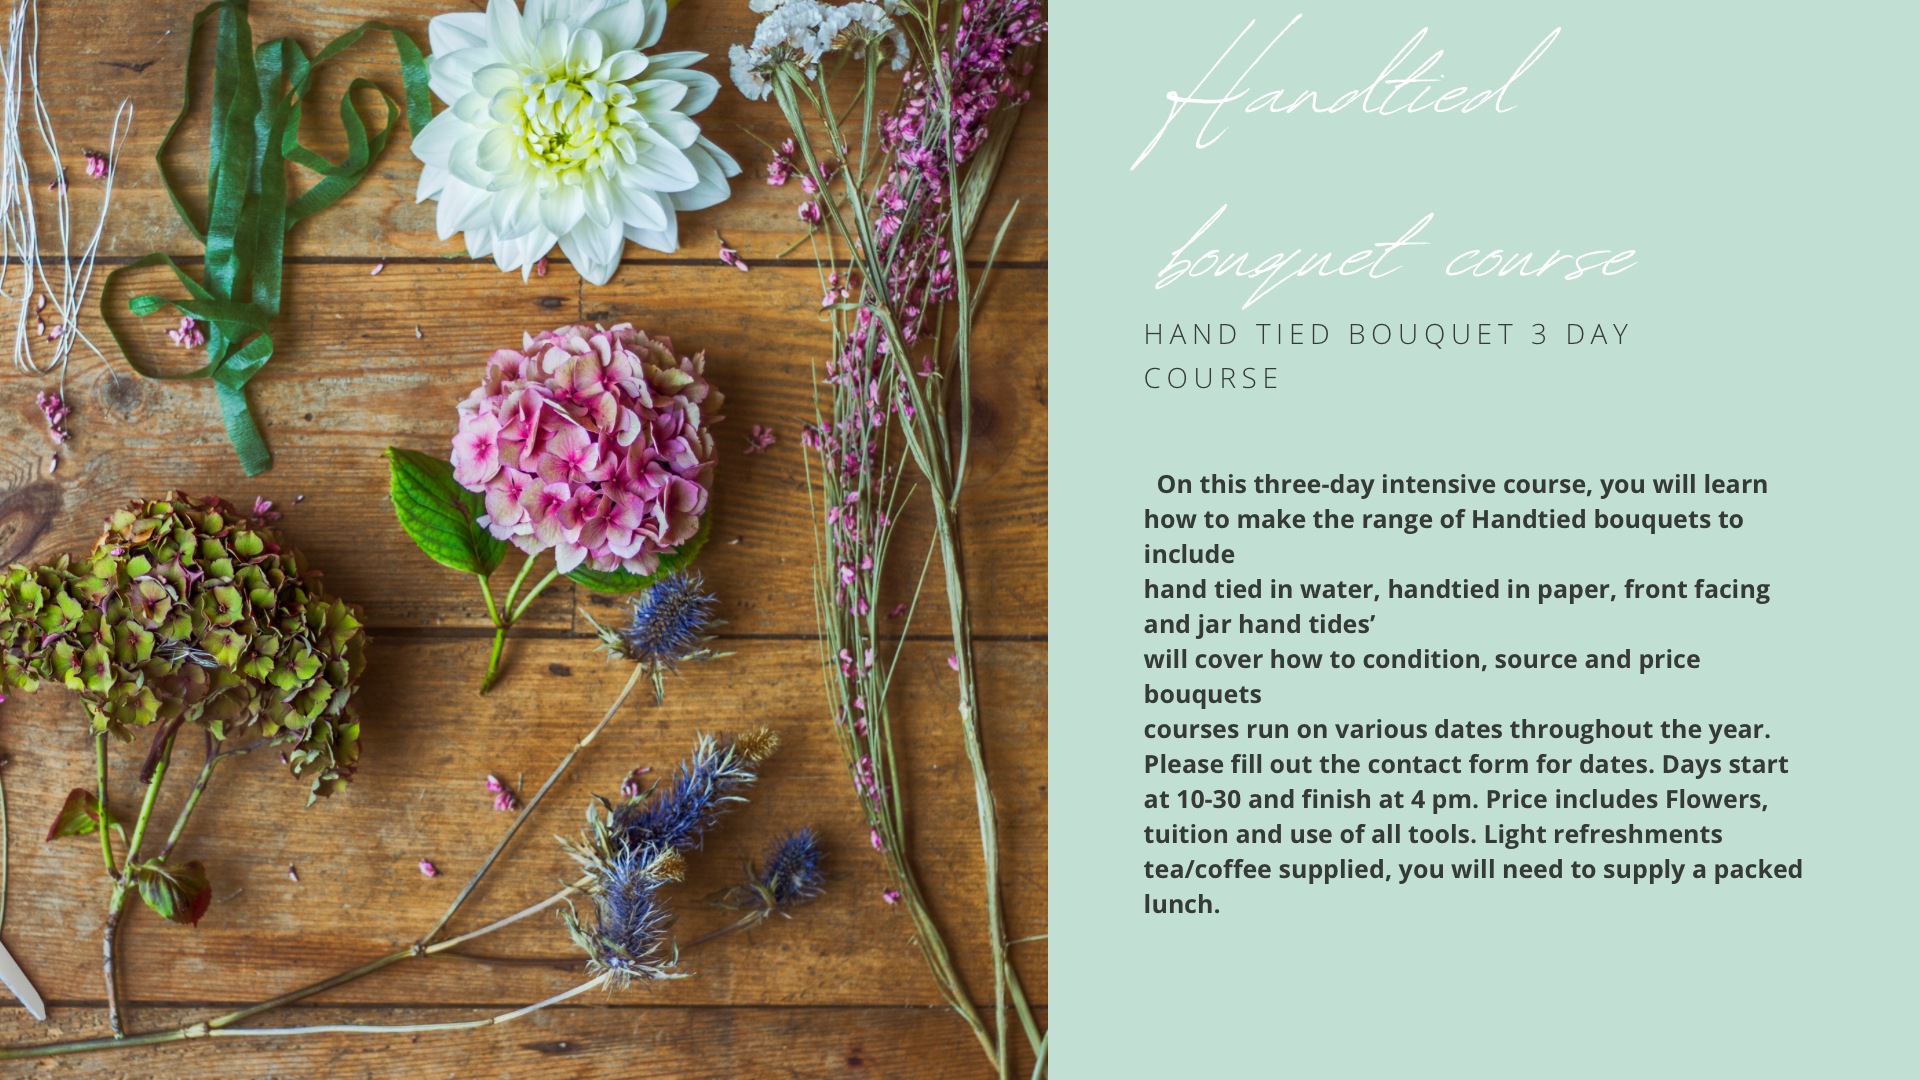 Lily & Bee | Waterlooville | Floristry school & workshops